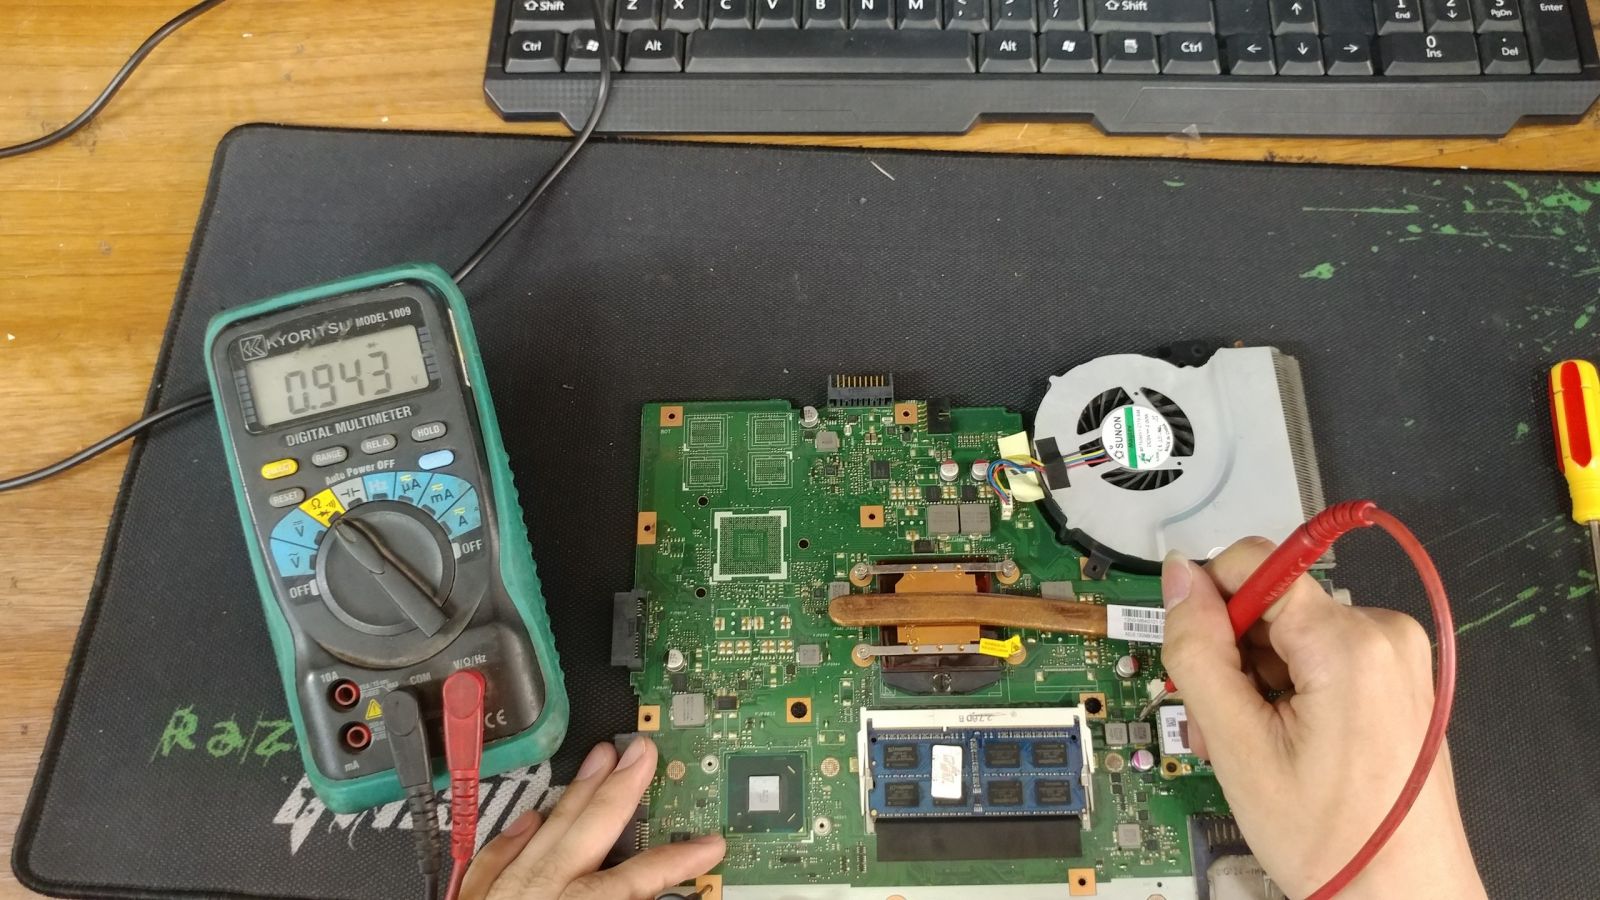 Sửa chữa Laptop Dell Vostro V13 lỗi Hệ thống hỏng-aalo.vn